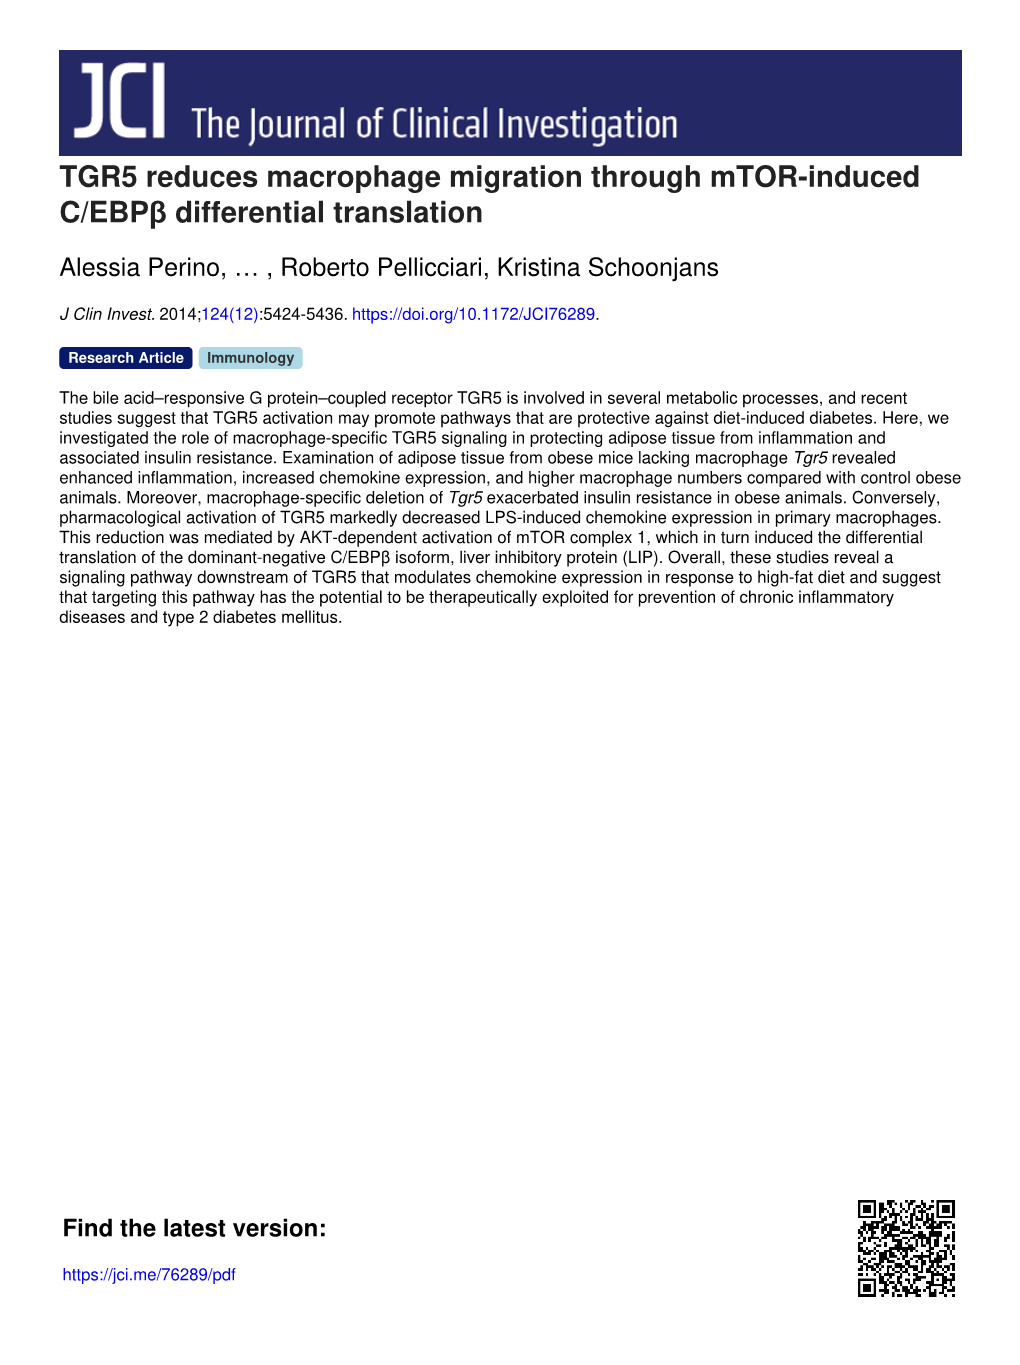 TGR5 Reduces Macrophage Migration Through Mtor-Induced C/Ebpβ Differential Translation